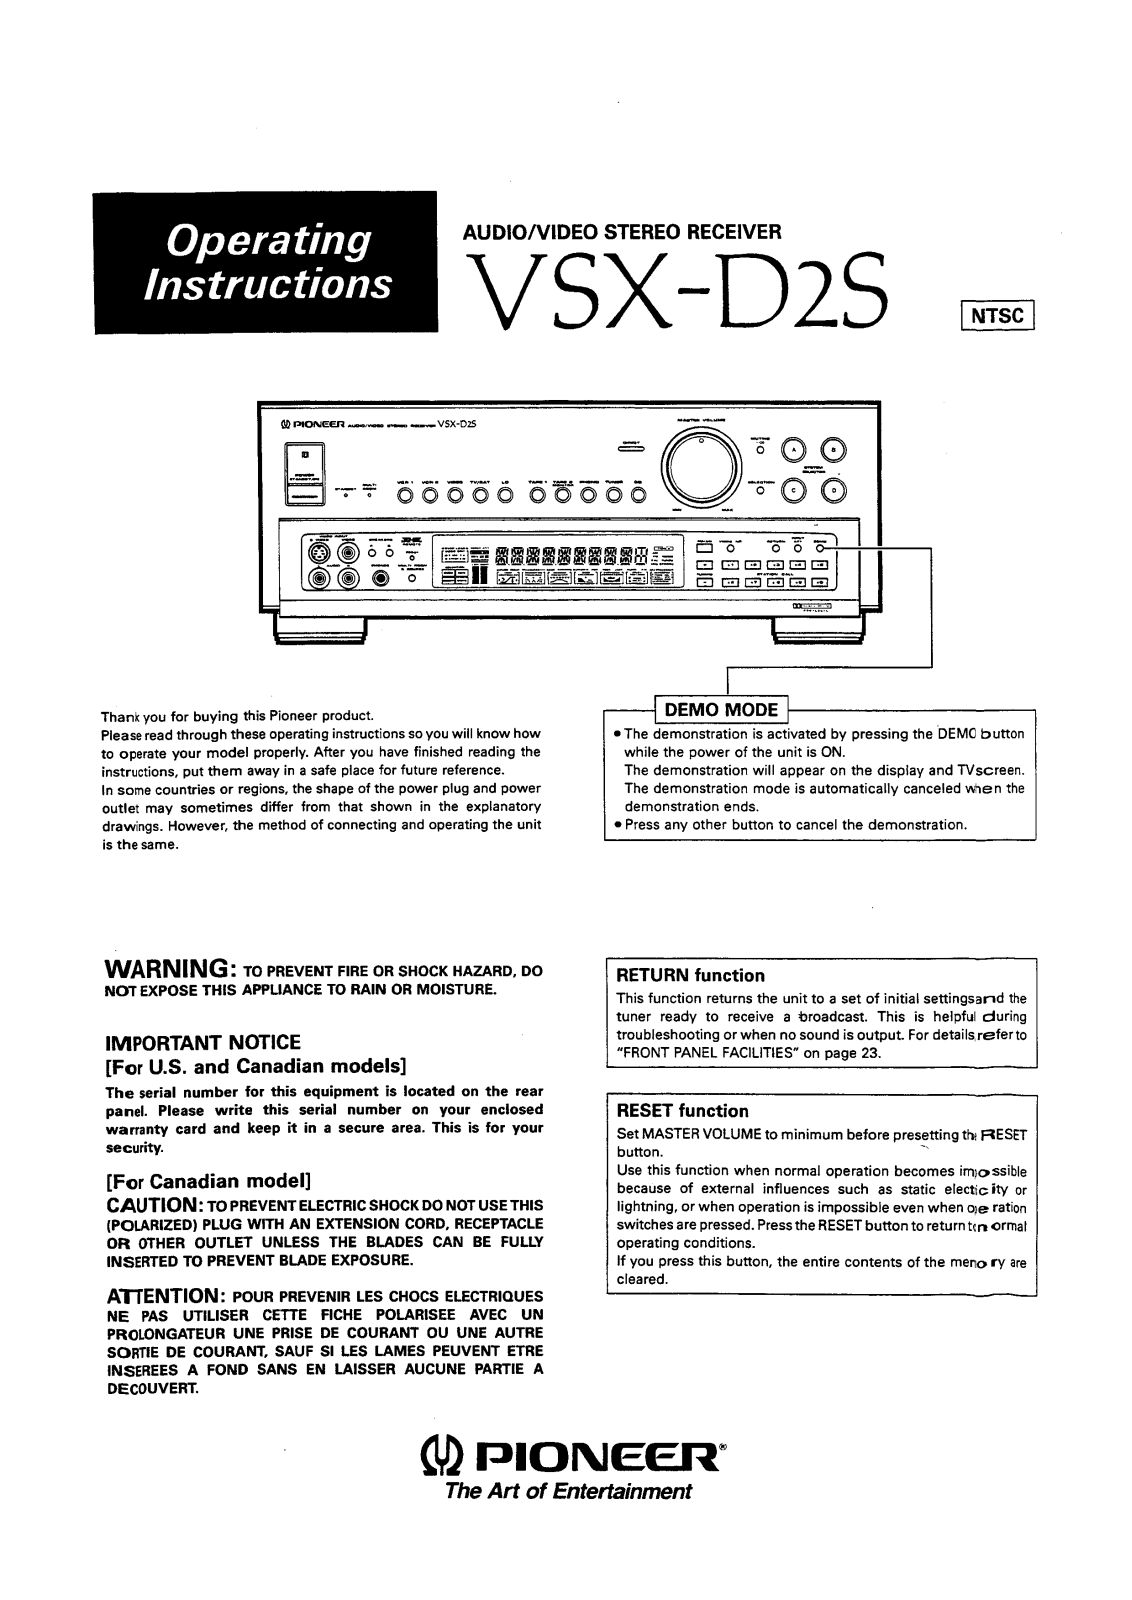 Pioneer VSX-D2S Manual